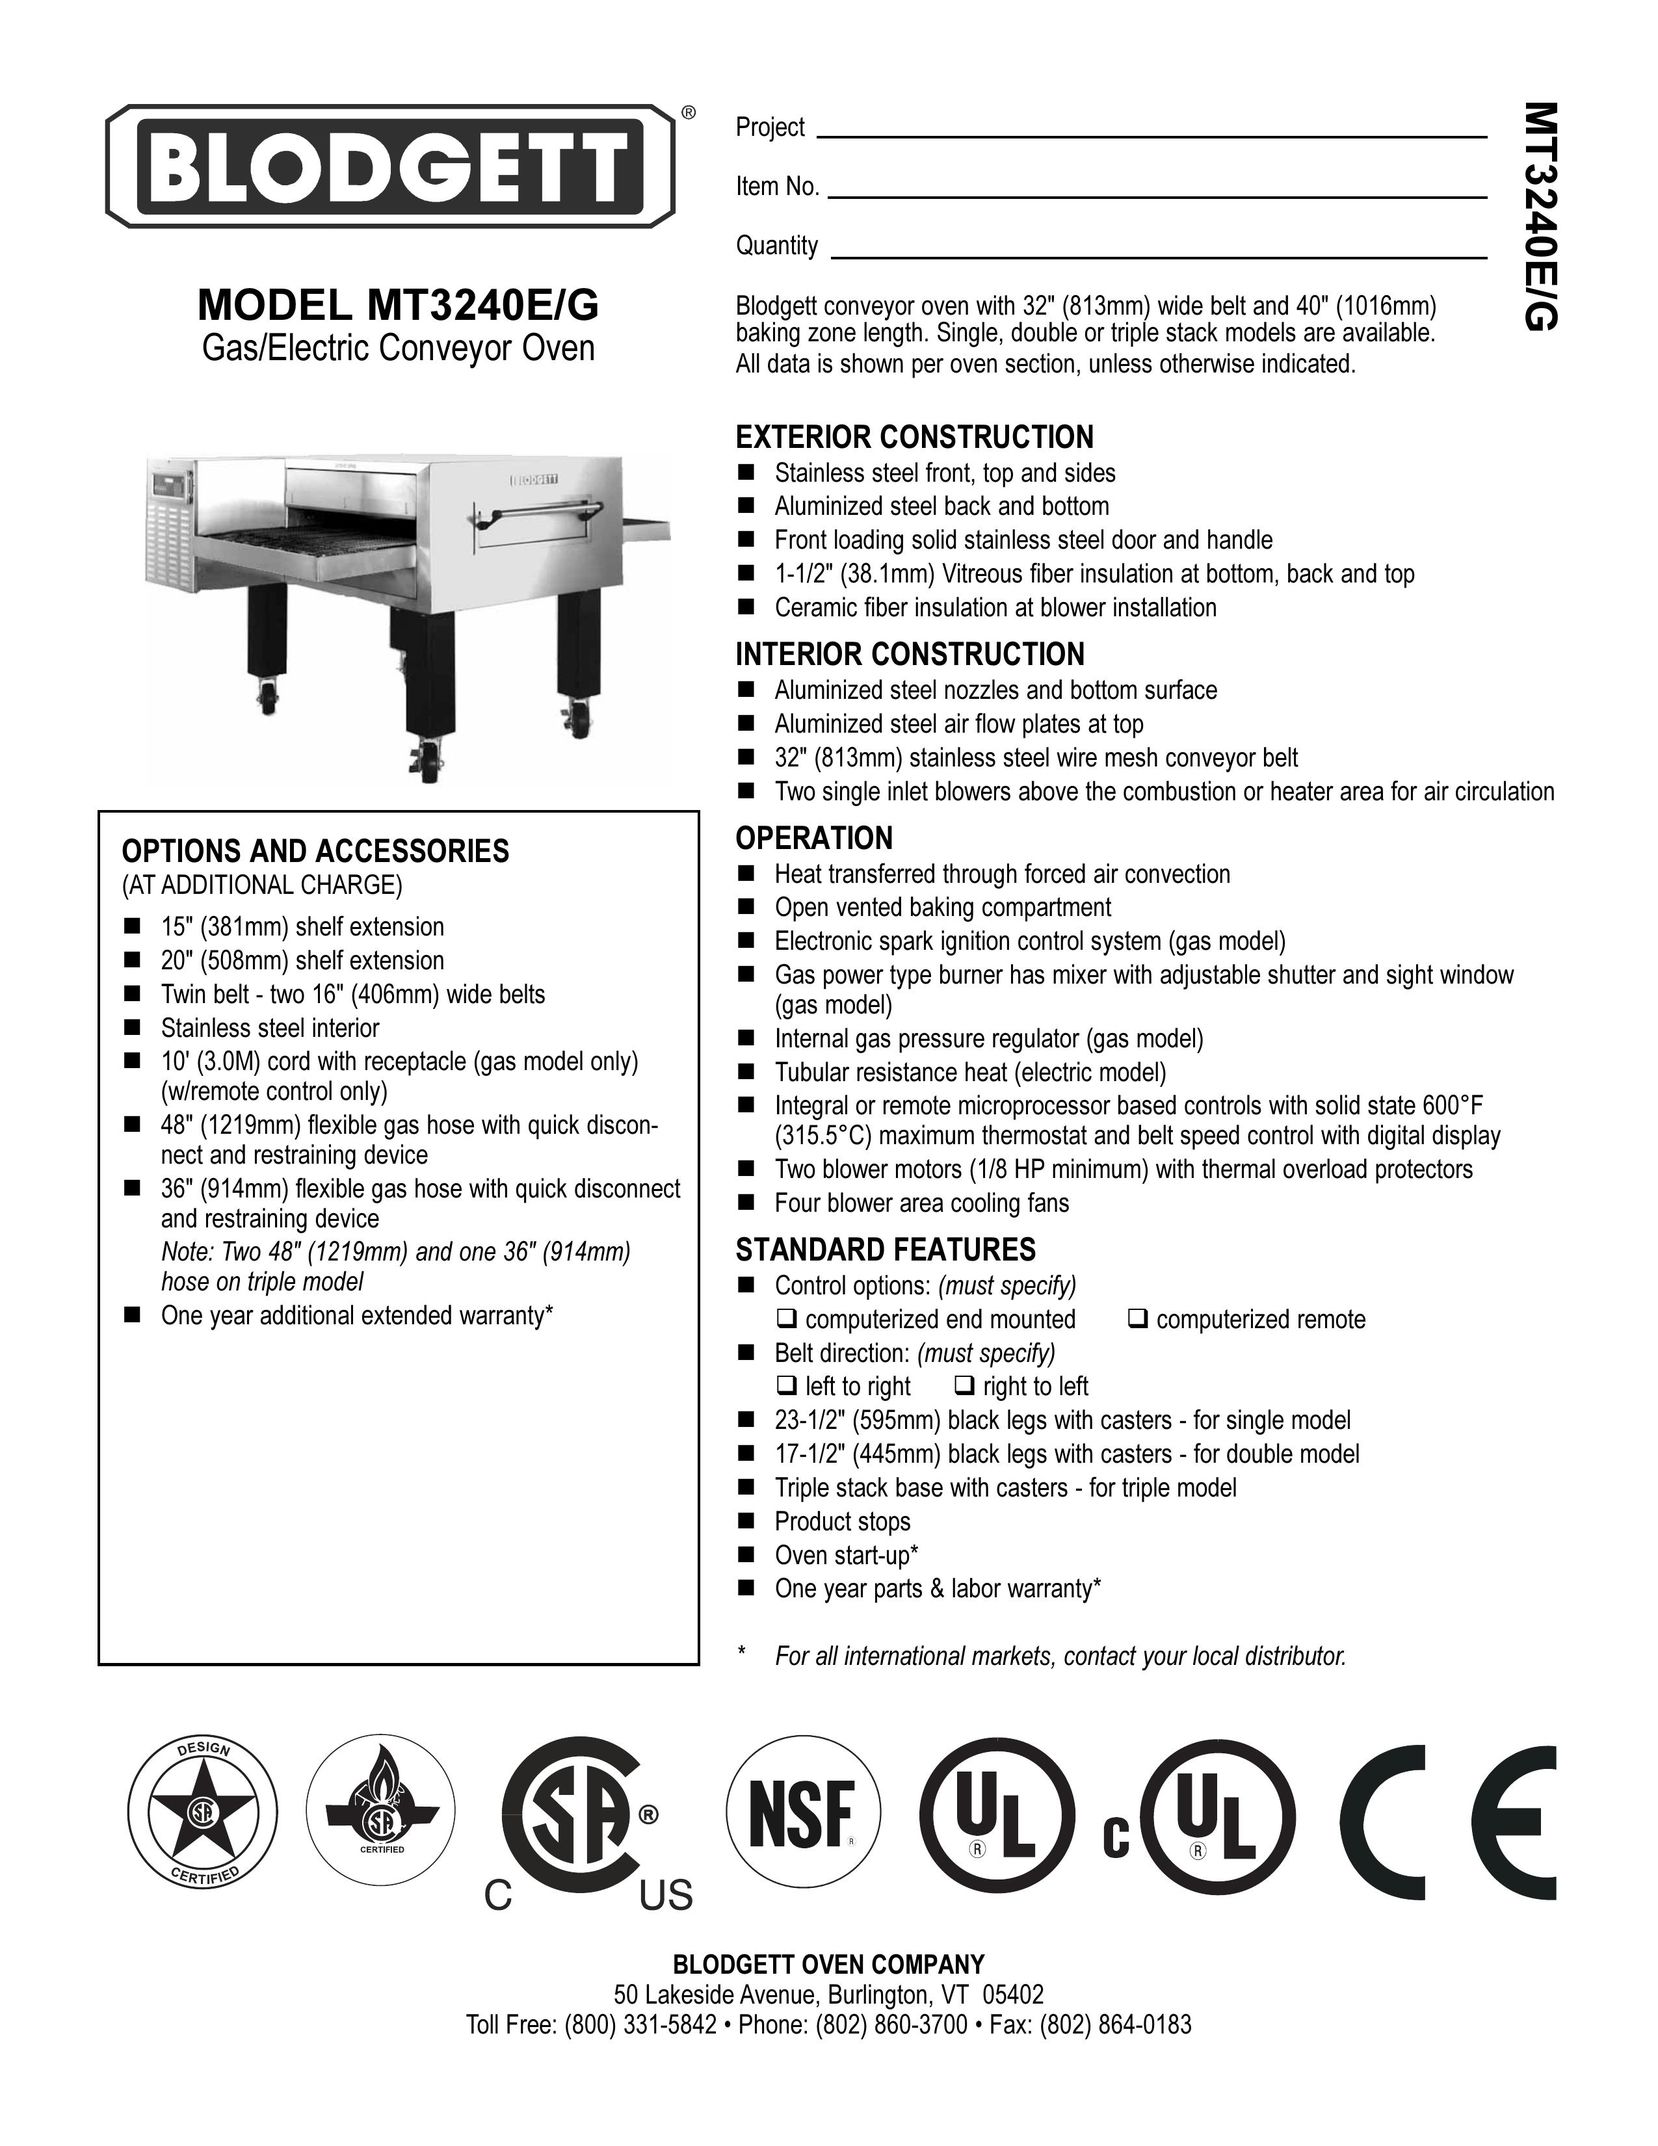 Blodgett MT3240E/G Oven User Manual